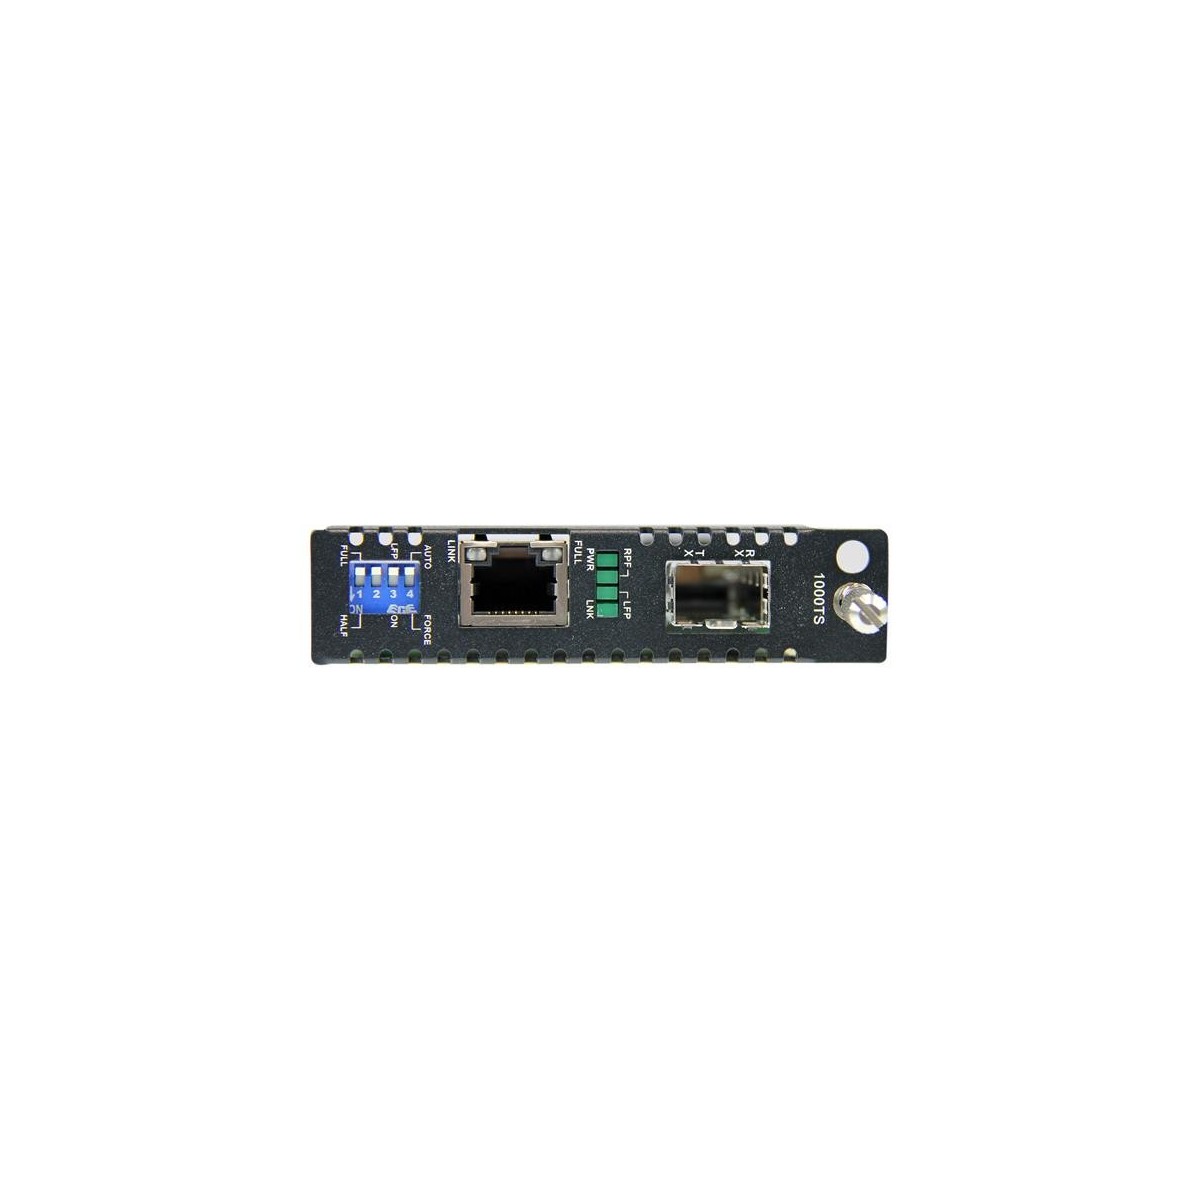 StarTech.com Gigabit Ethernet Fiber Media Converter Card Module with Open SFP Slot - 1250 Mbit/s - 1000Base-T - 1000Base-LX,1000